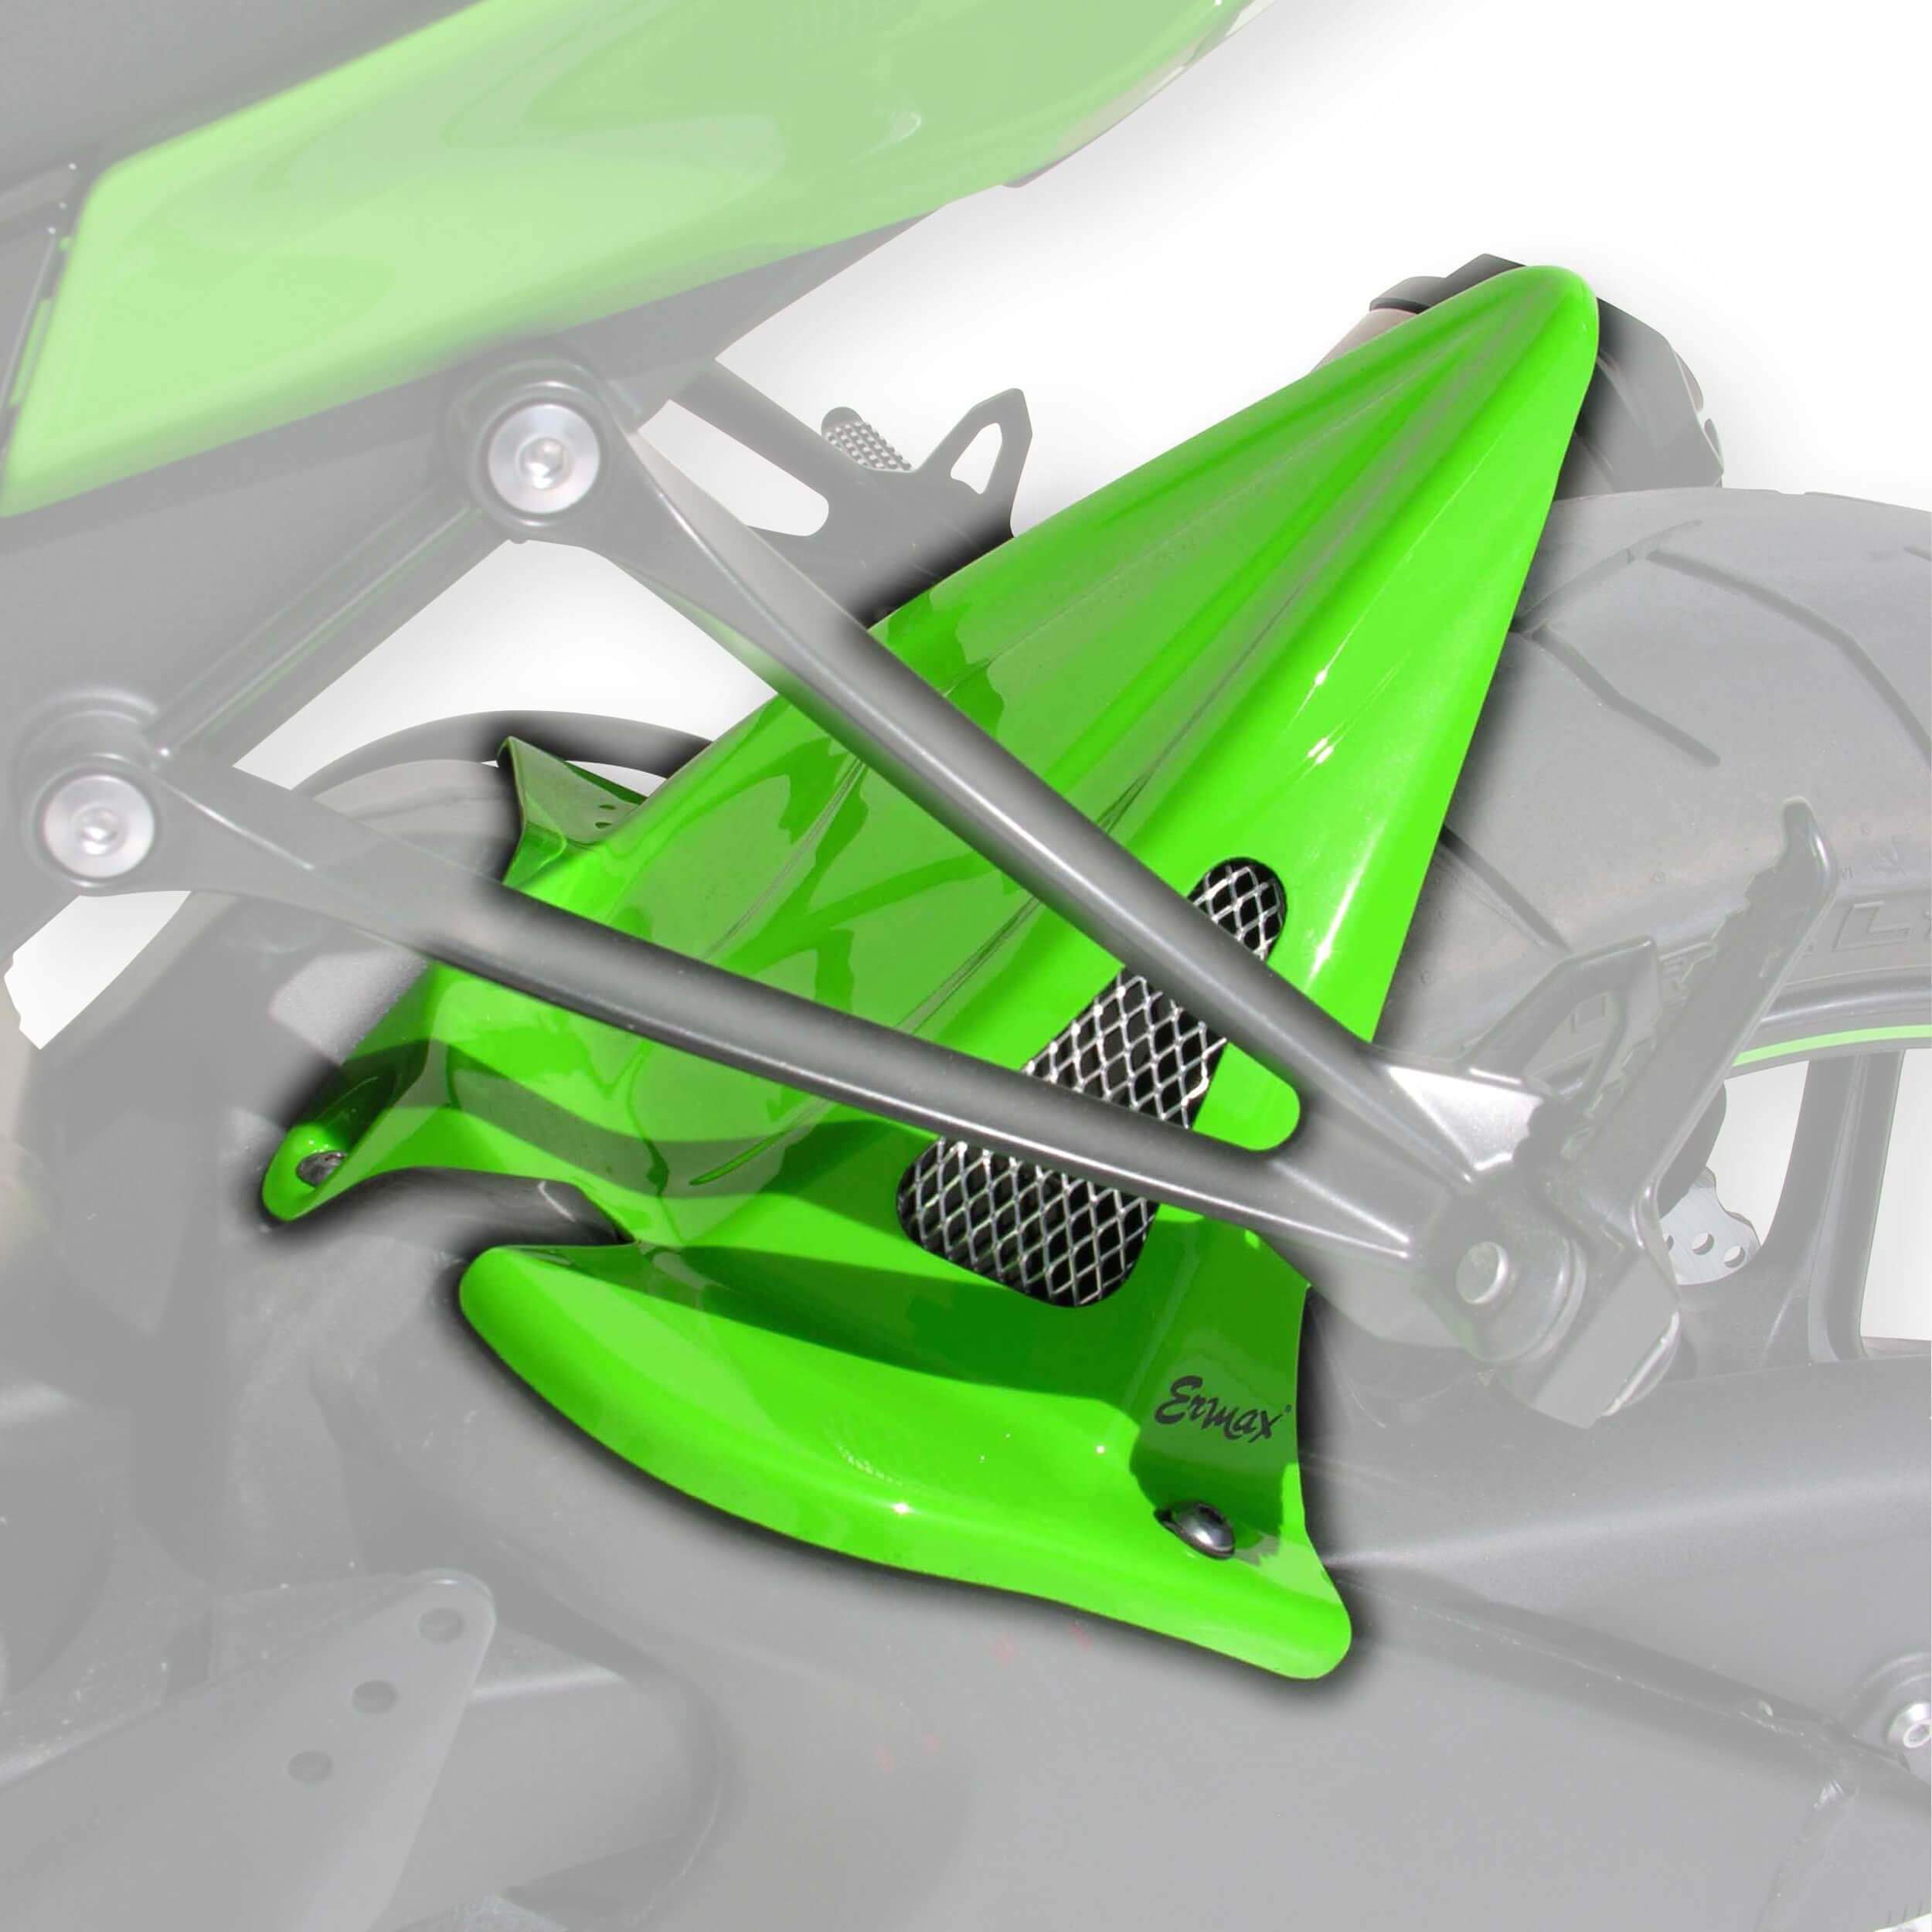 Ermax Hugger | Gloss Green (Lime Green) | Kawasaki ZX10-R 2008>2010-E730342069-Huggers-Pyramid Motorcycle Accessories